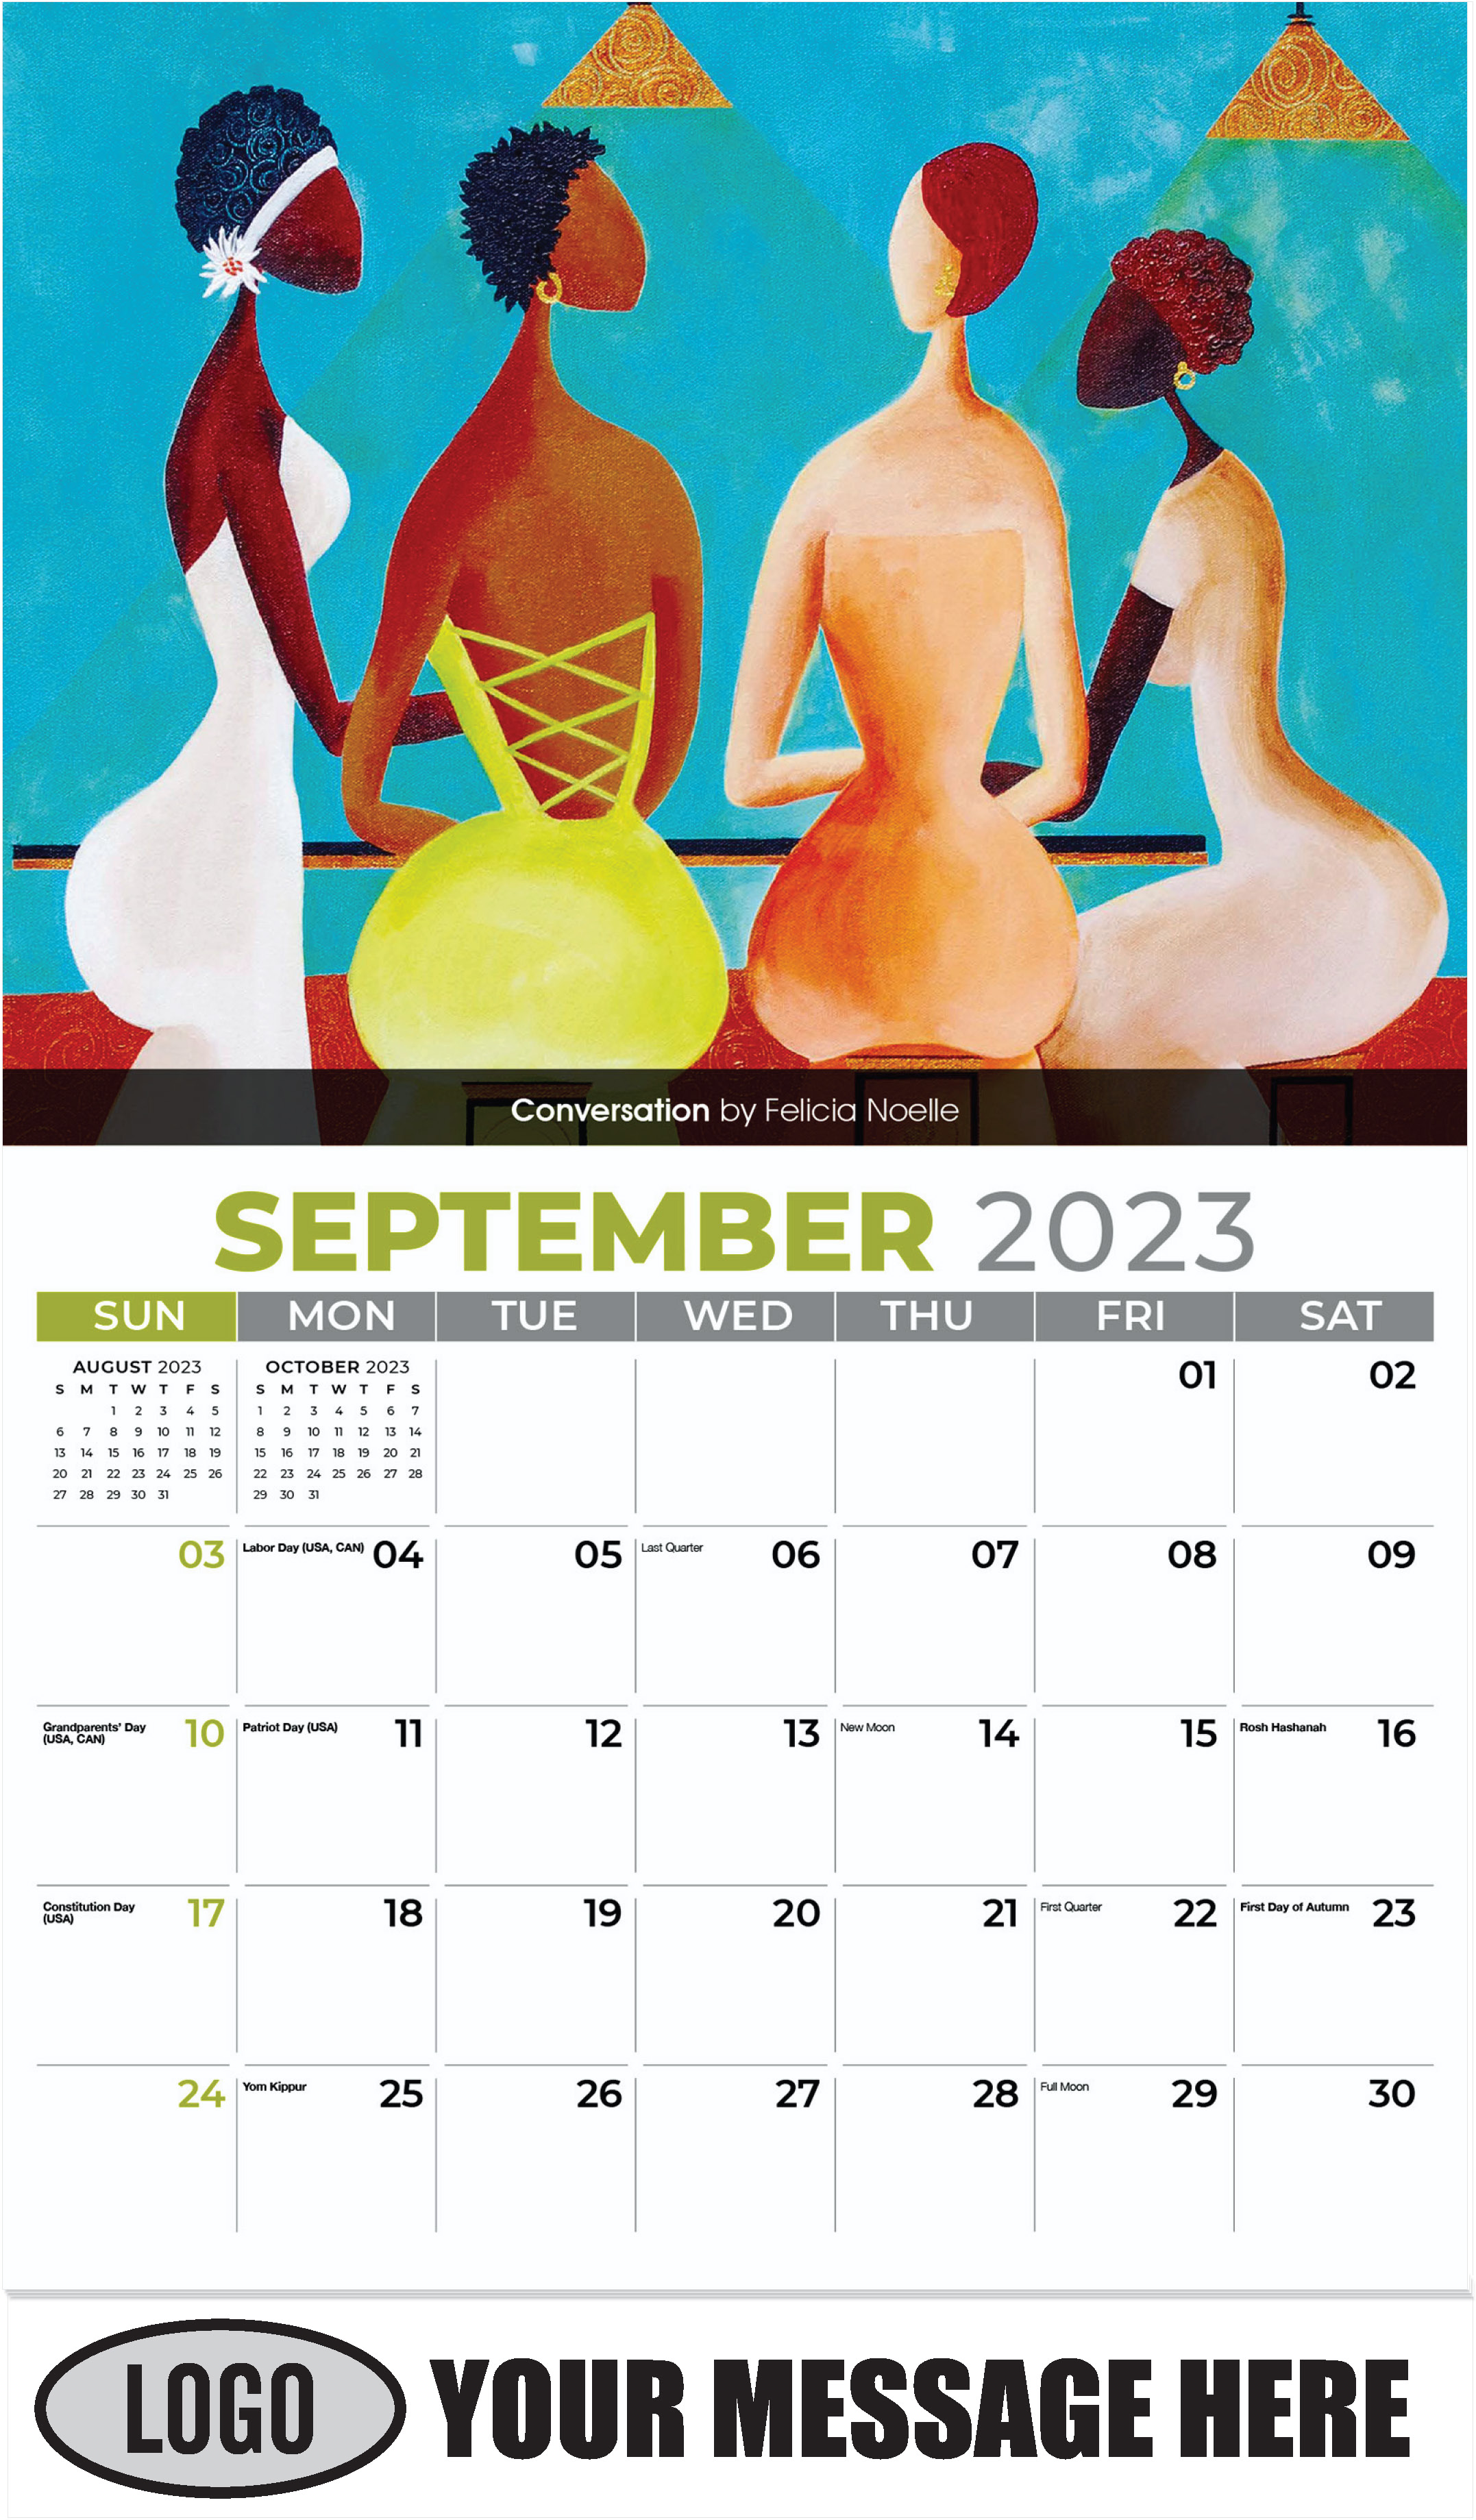 Conversation by Felicia Noelle - September - Celebration of African American Art 2023 Promotional Calendar